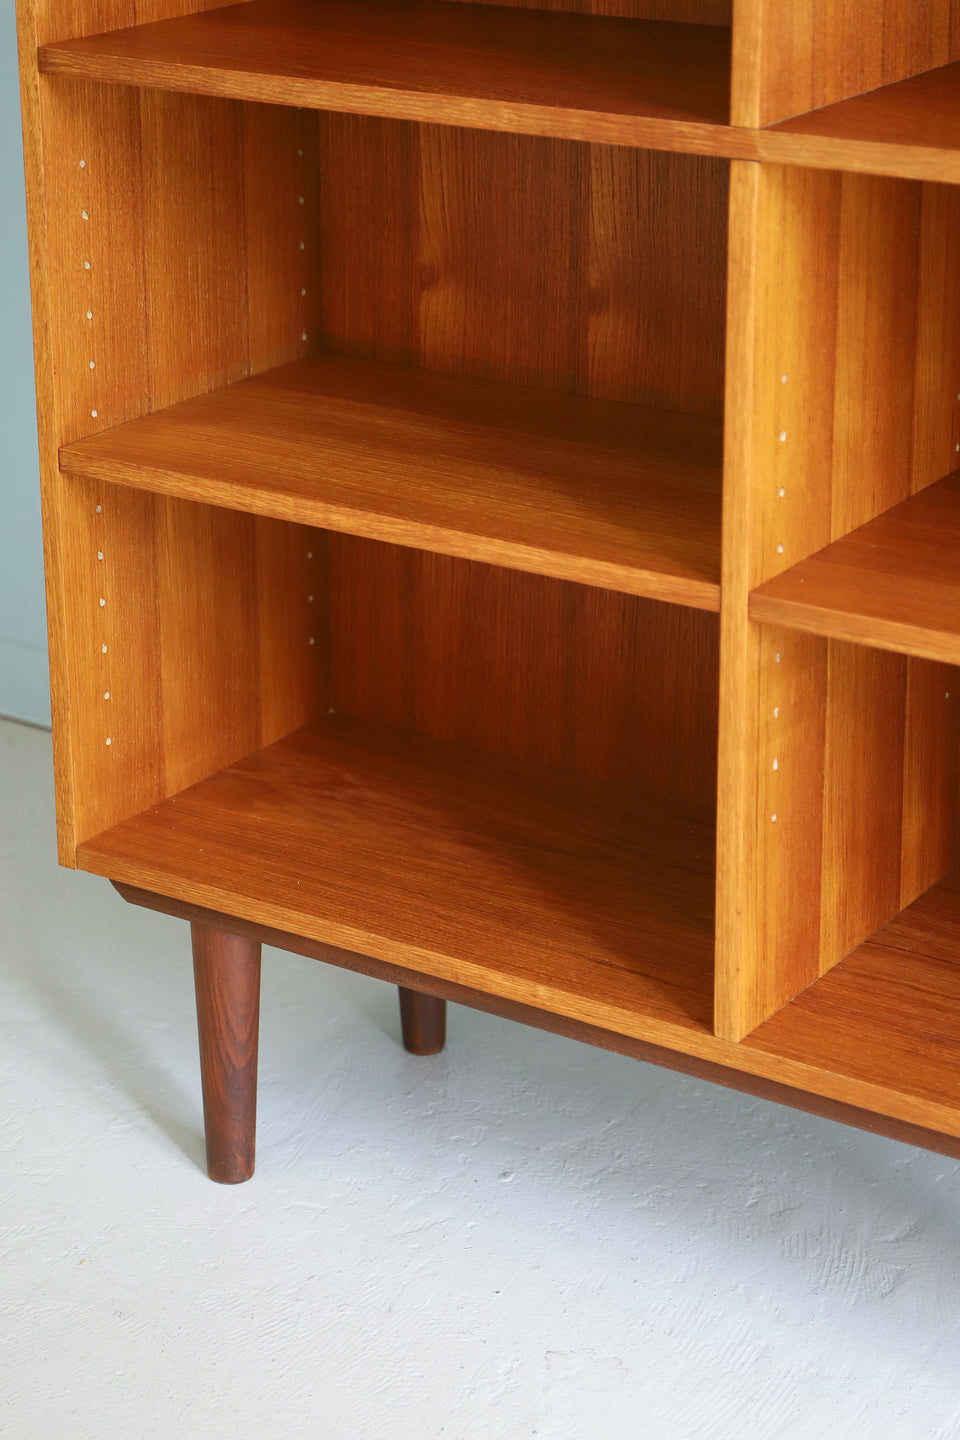 Vintage Bookcase Shelf Teakwood Danish/デンマークヴィンテージ ブックケース 本棚 チーク材 収納 北欧家具